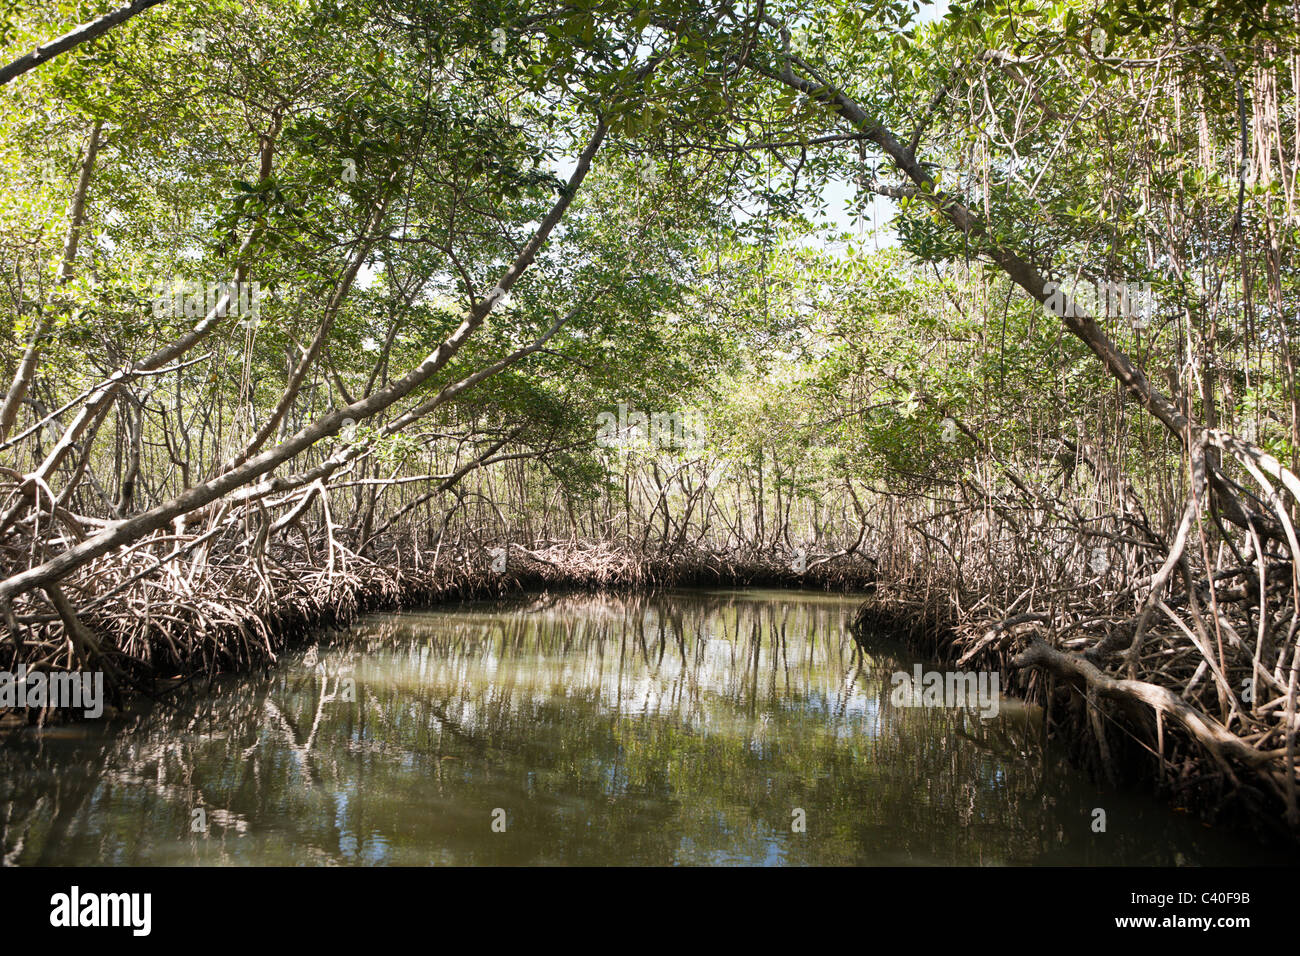 Mangroves, Rhizophora, Los Haitises National Park, Dominican Republic Stock Photo